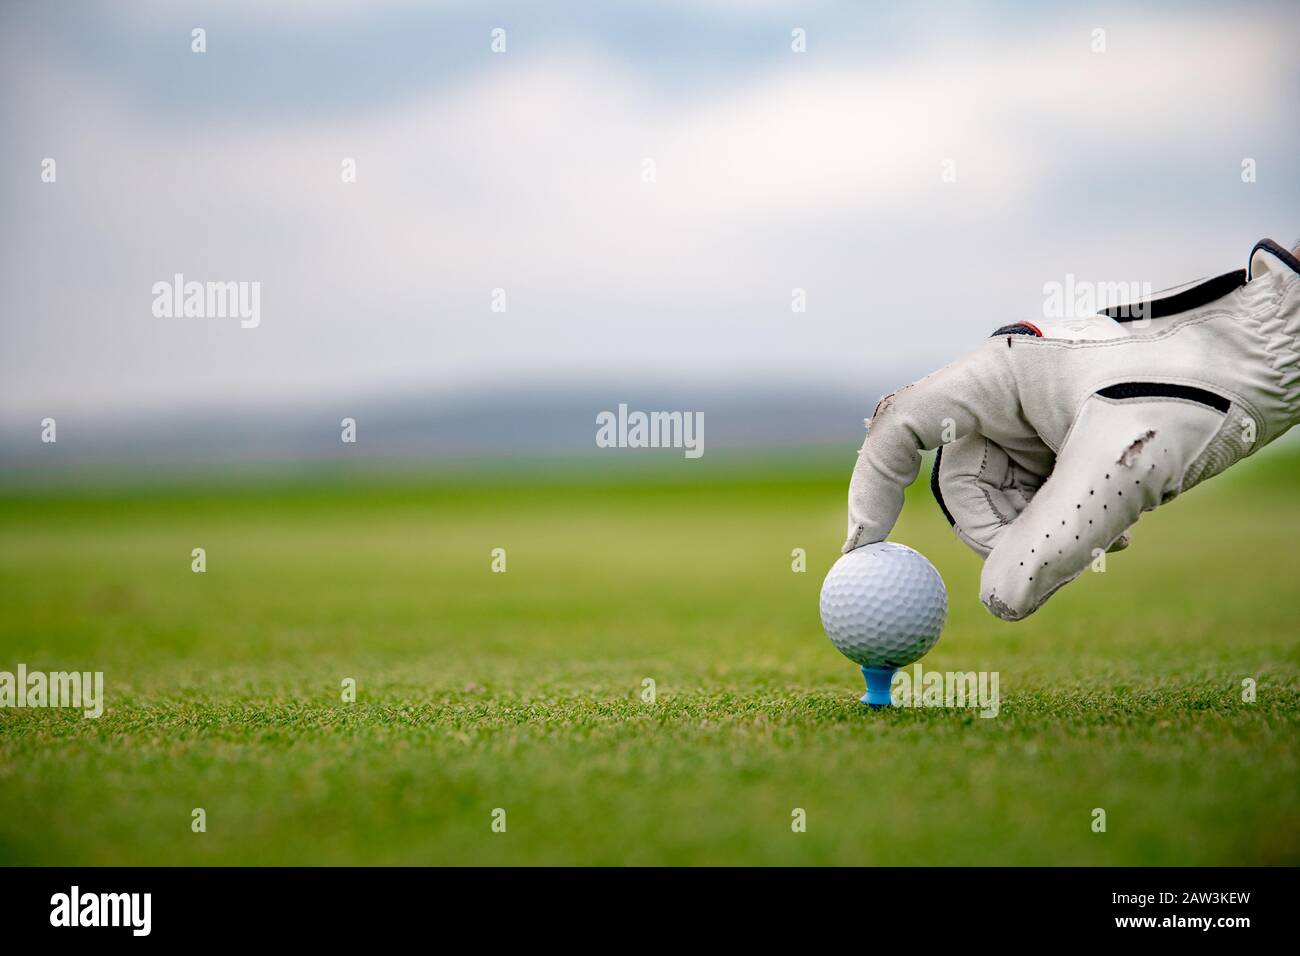 A golf player prepares a golf ball on a green course Stock Photo